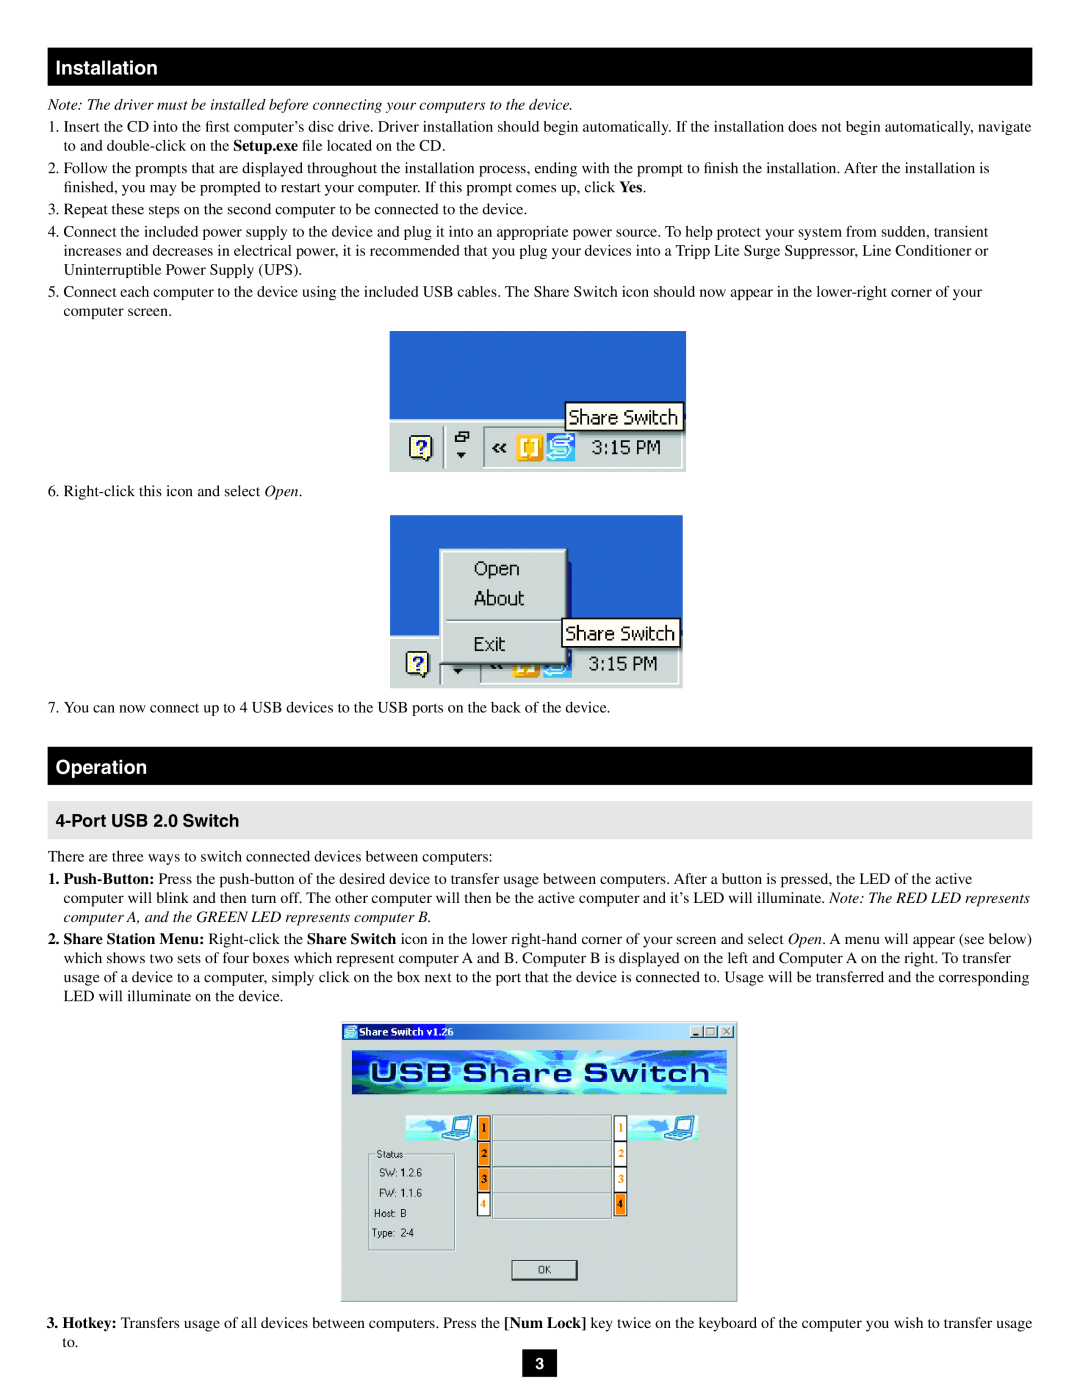 Tripp Lite U230-204-R owner manual Installation, Operation, Port USB 2.0 Switch 